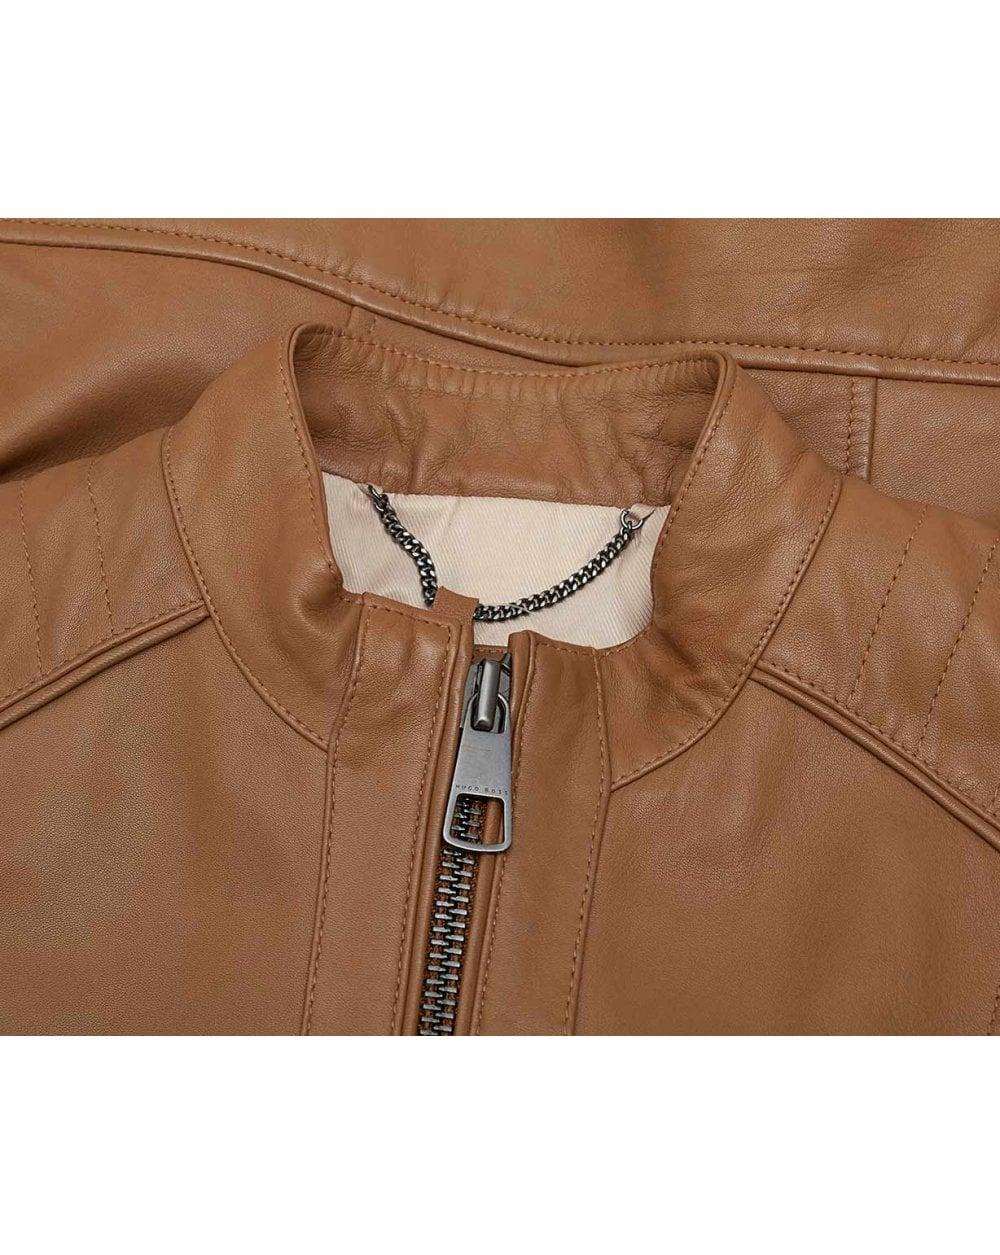 Hugo Boss Junique Leather Jacket 